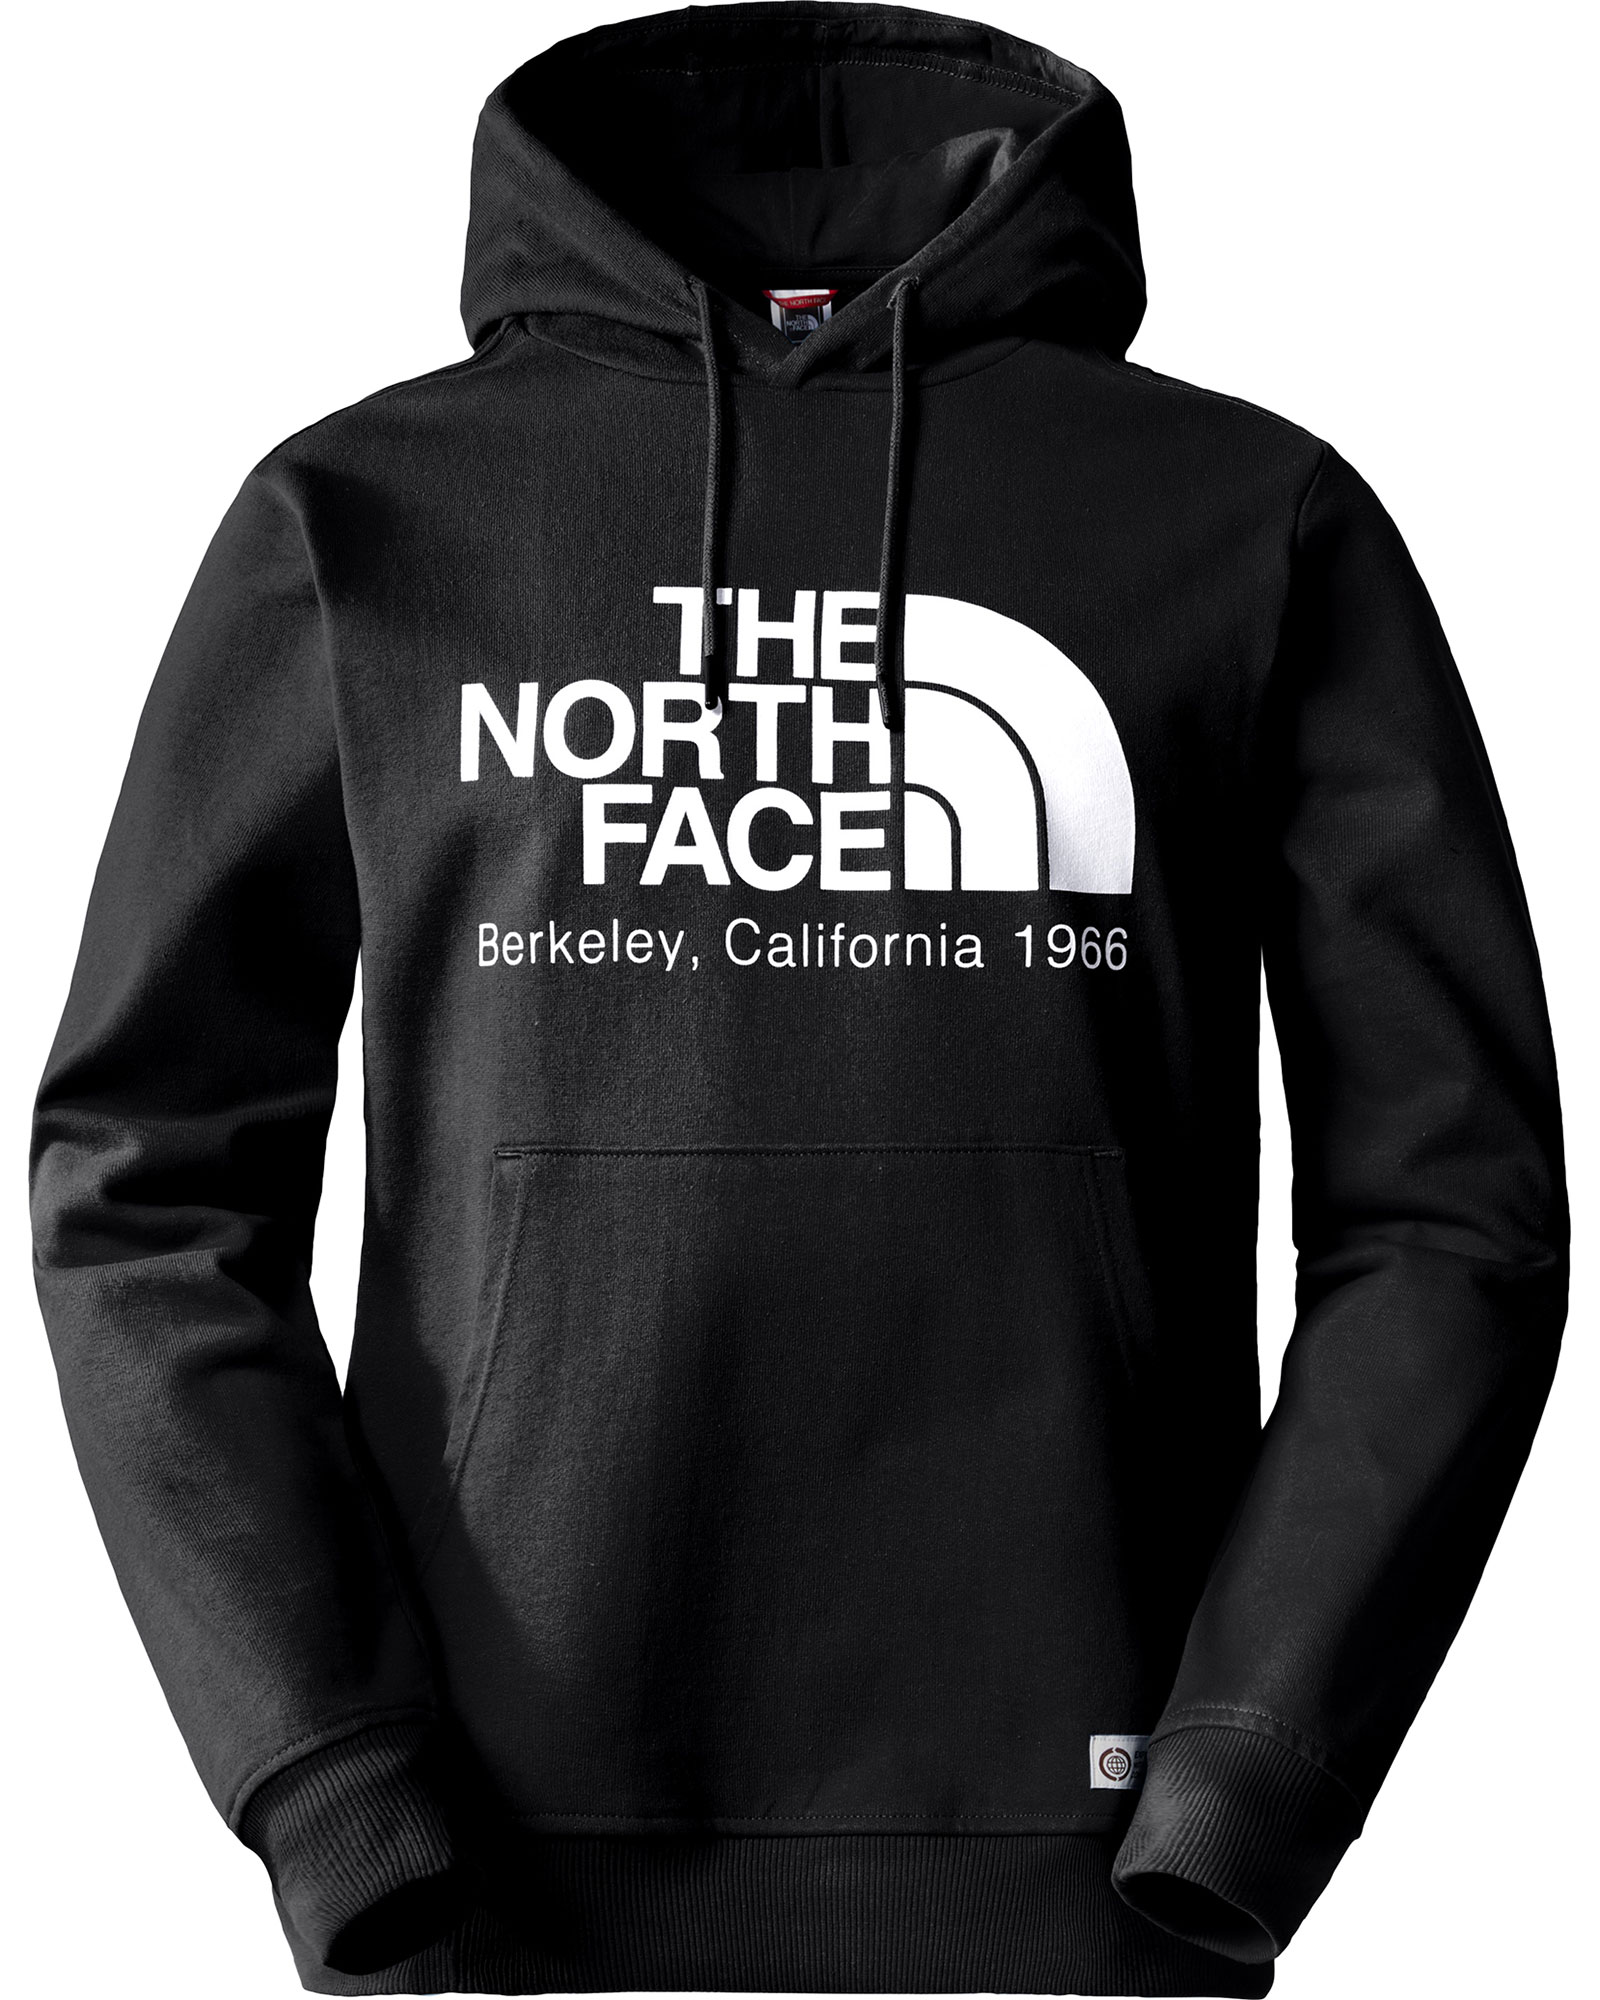 The North Face Men’s Berkeley California Hoodie - TNF Black XXL